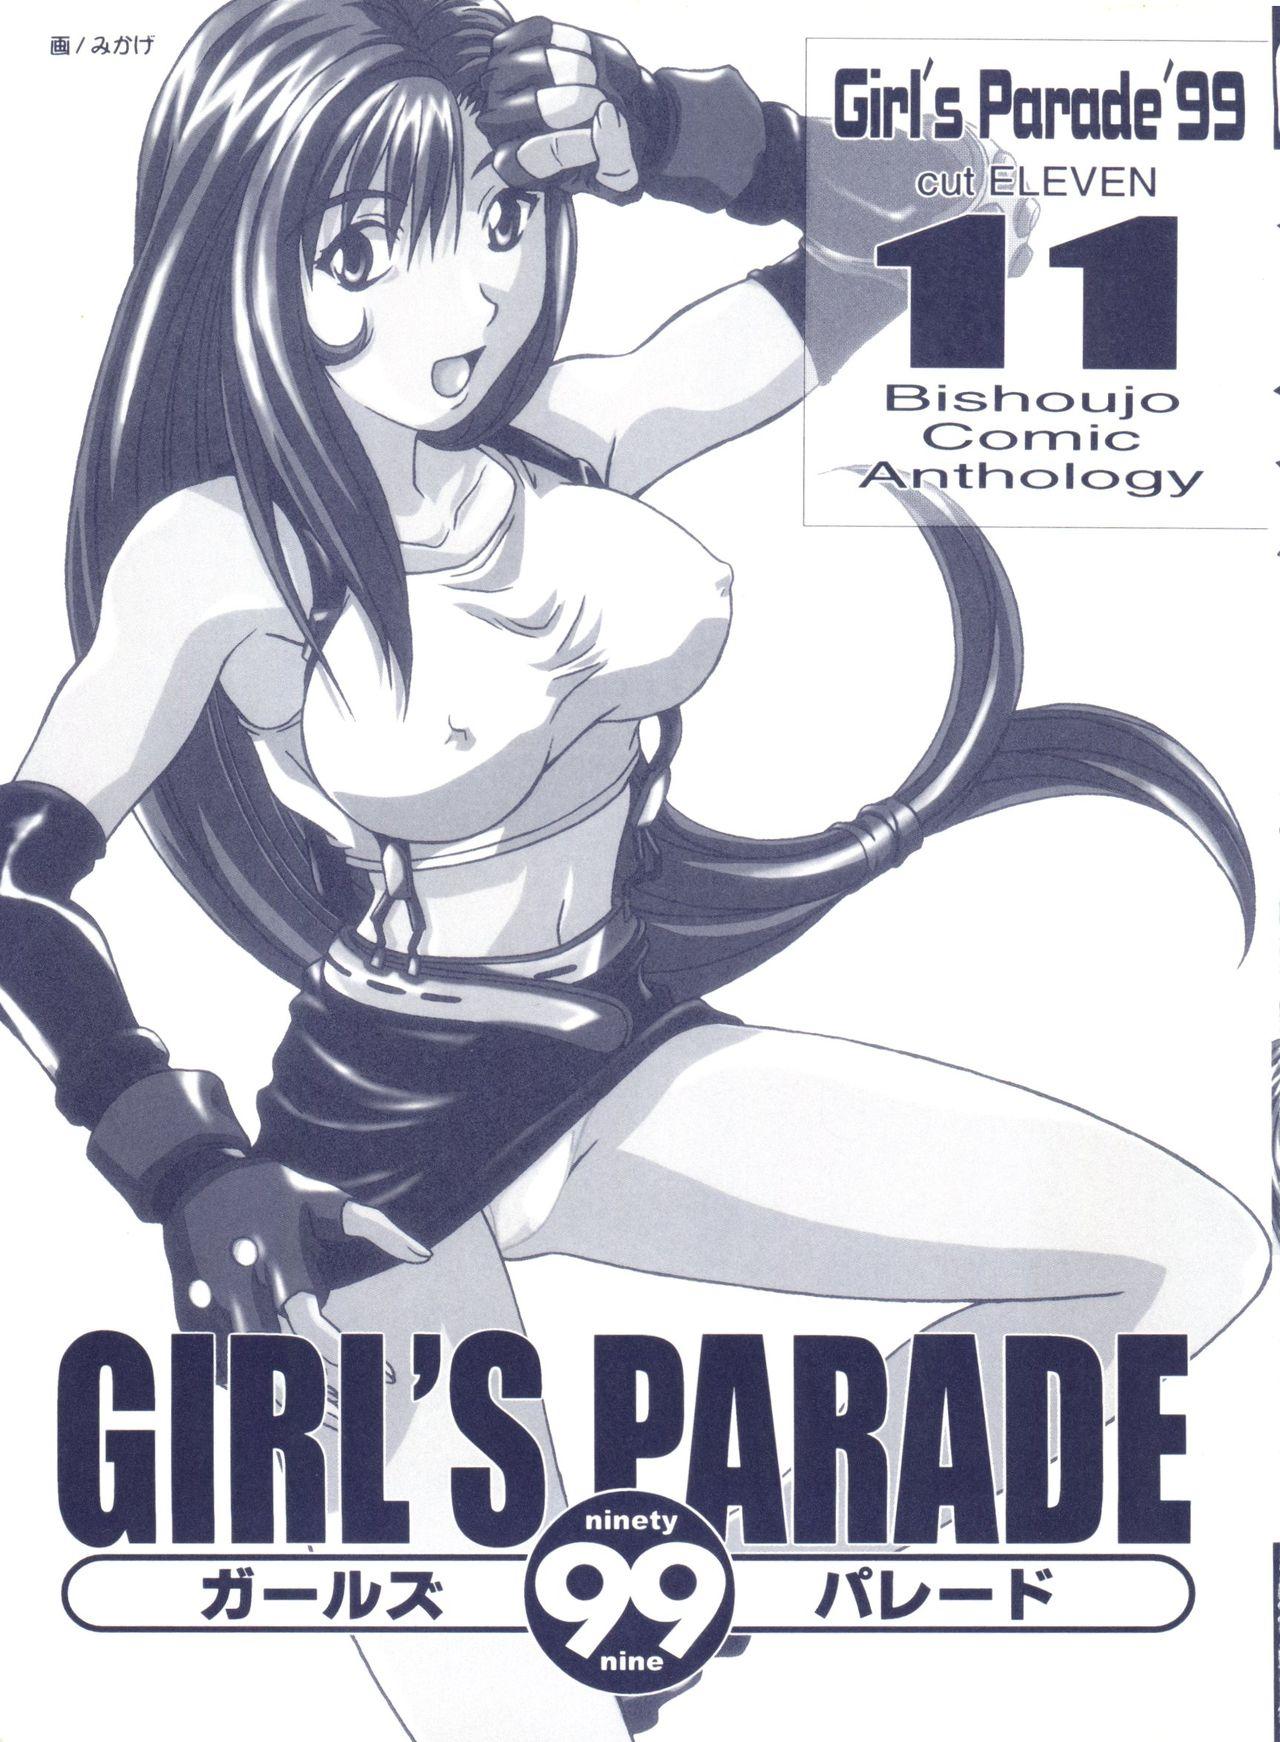 Girl's Parade 99 Cut 11 1